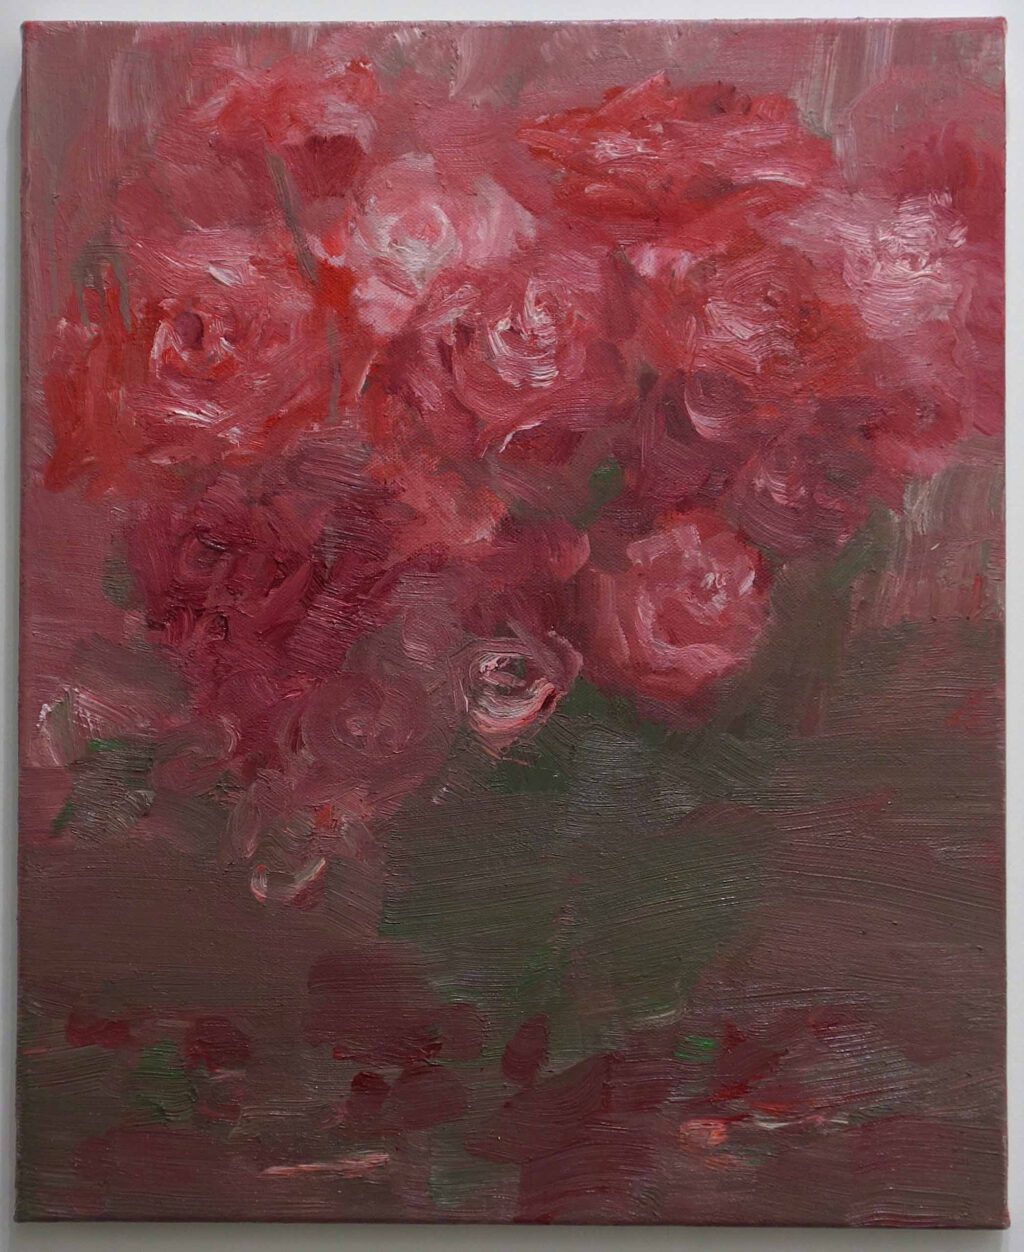 Yan Pei-Ming Bouquet de roses 2022. Oil on canvas, 61 x 50 x 2 cm @ MASSIMODECARLO